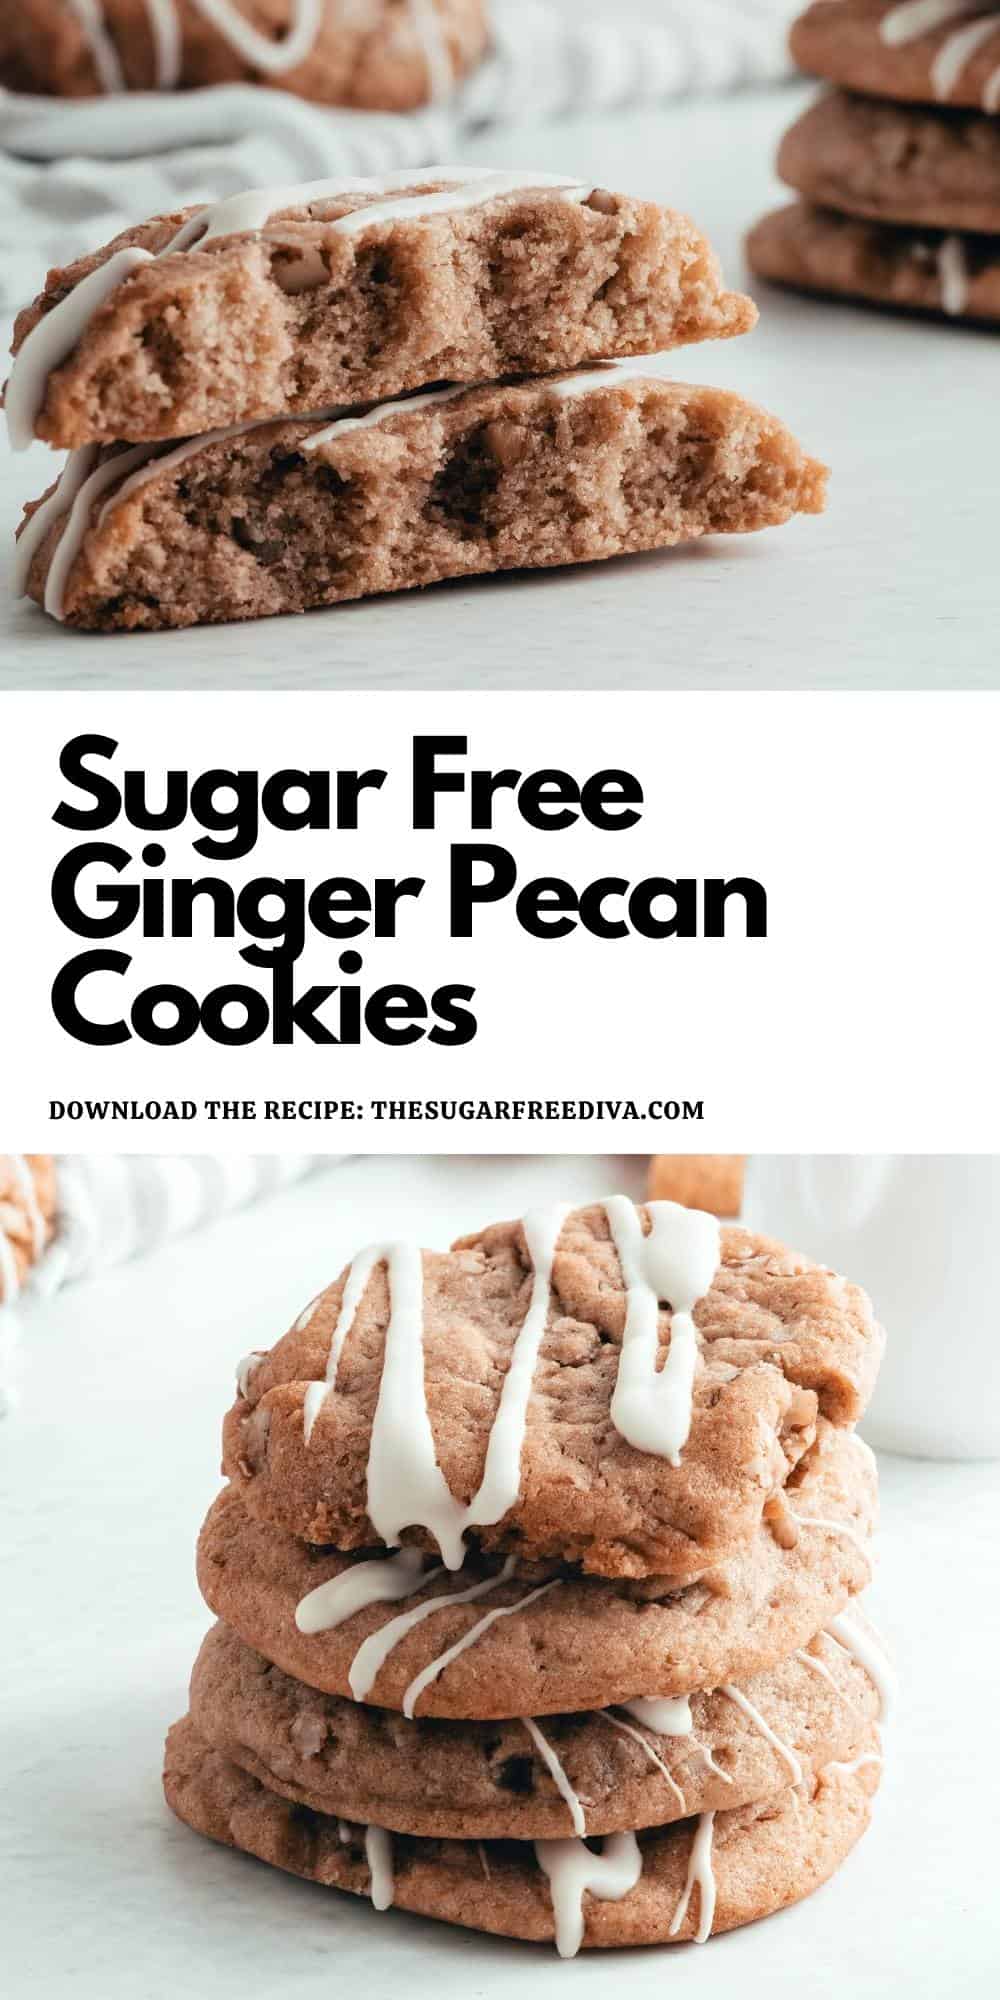 Sugar Free Ginger Pecan Cookies,